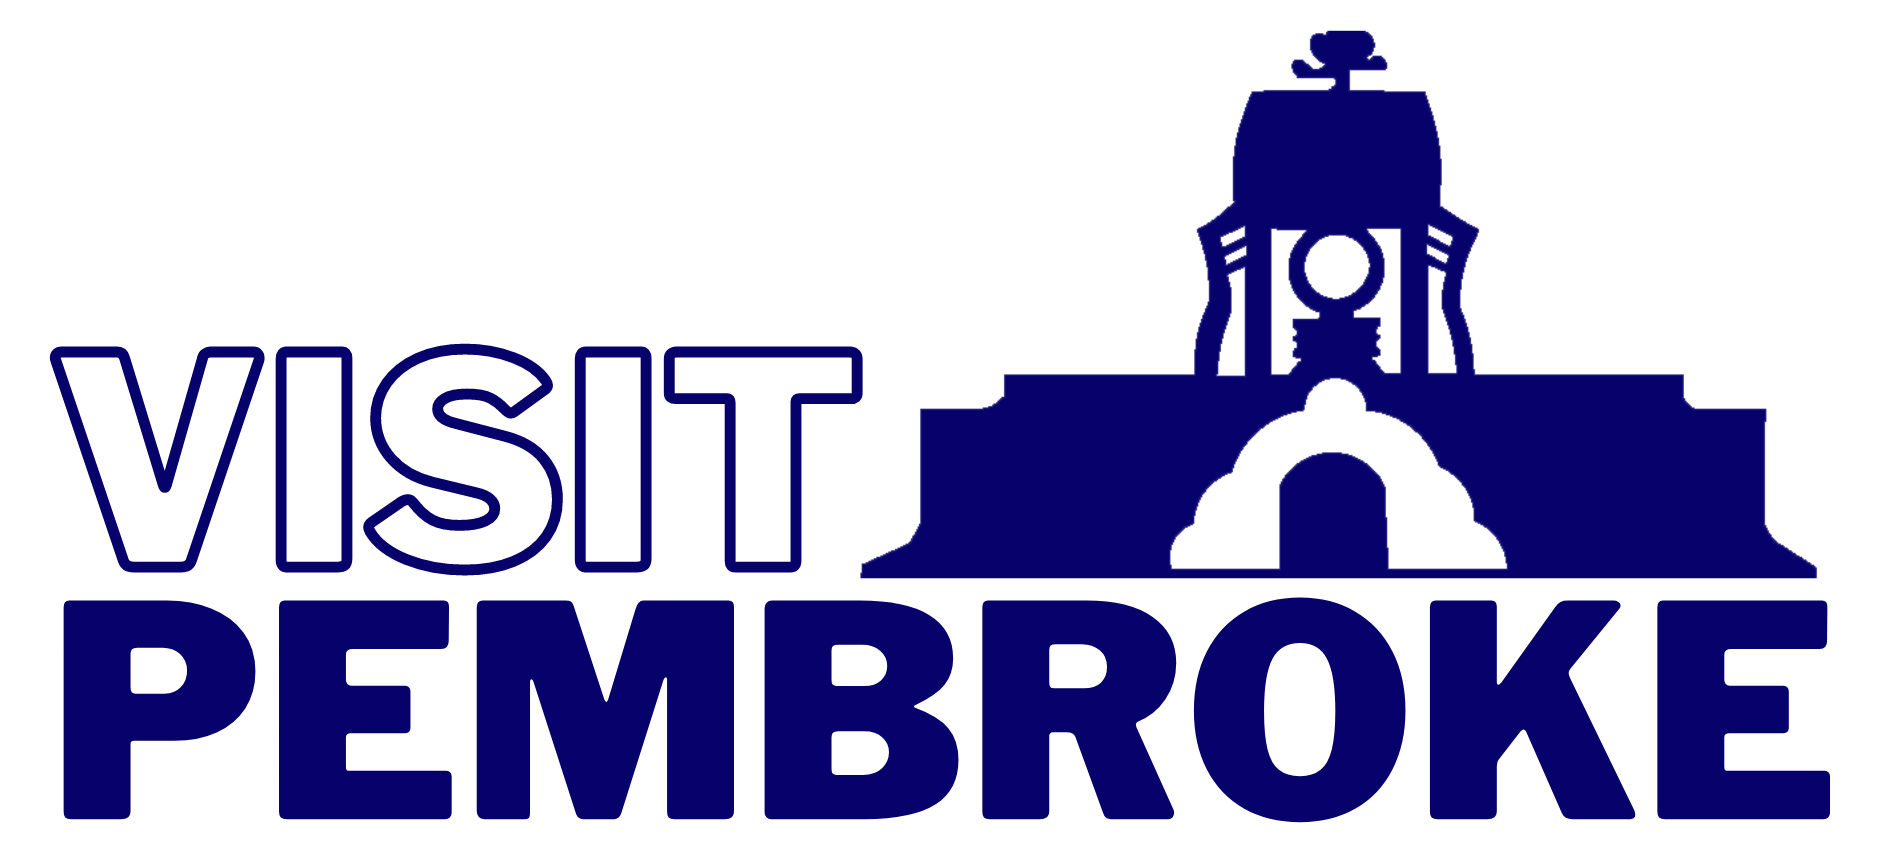 Logo reading Visit Pembroke